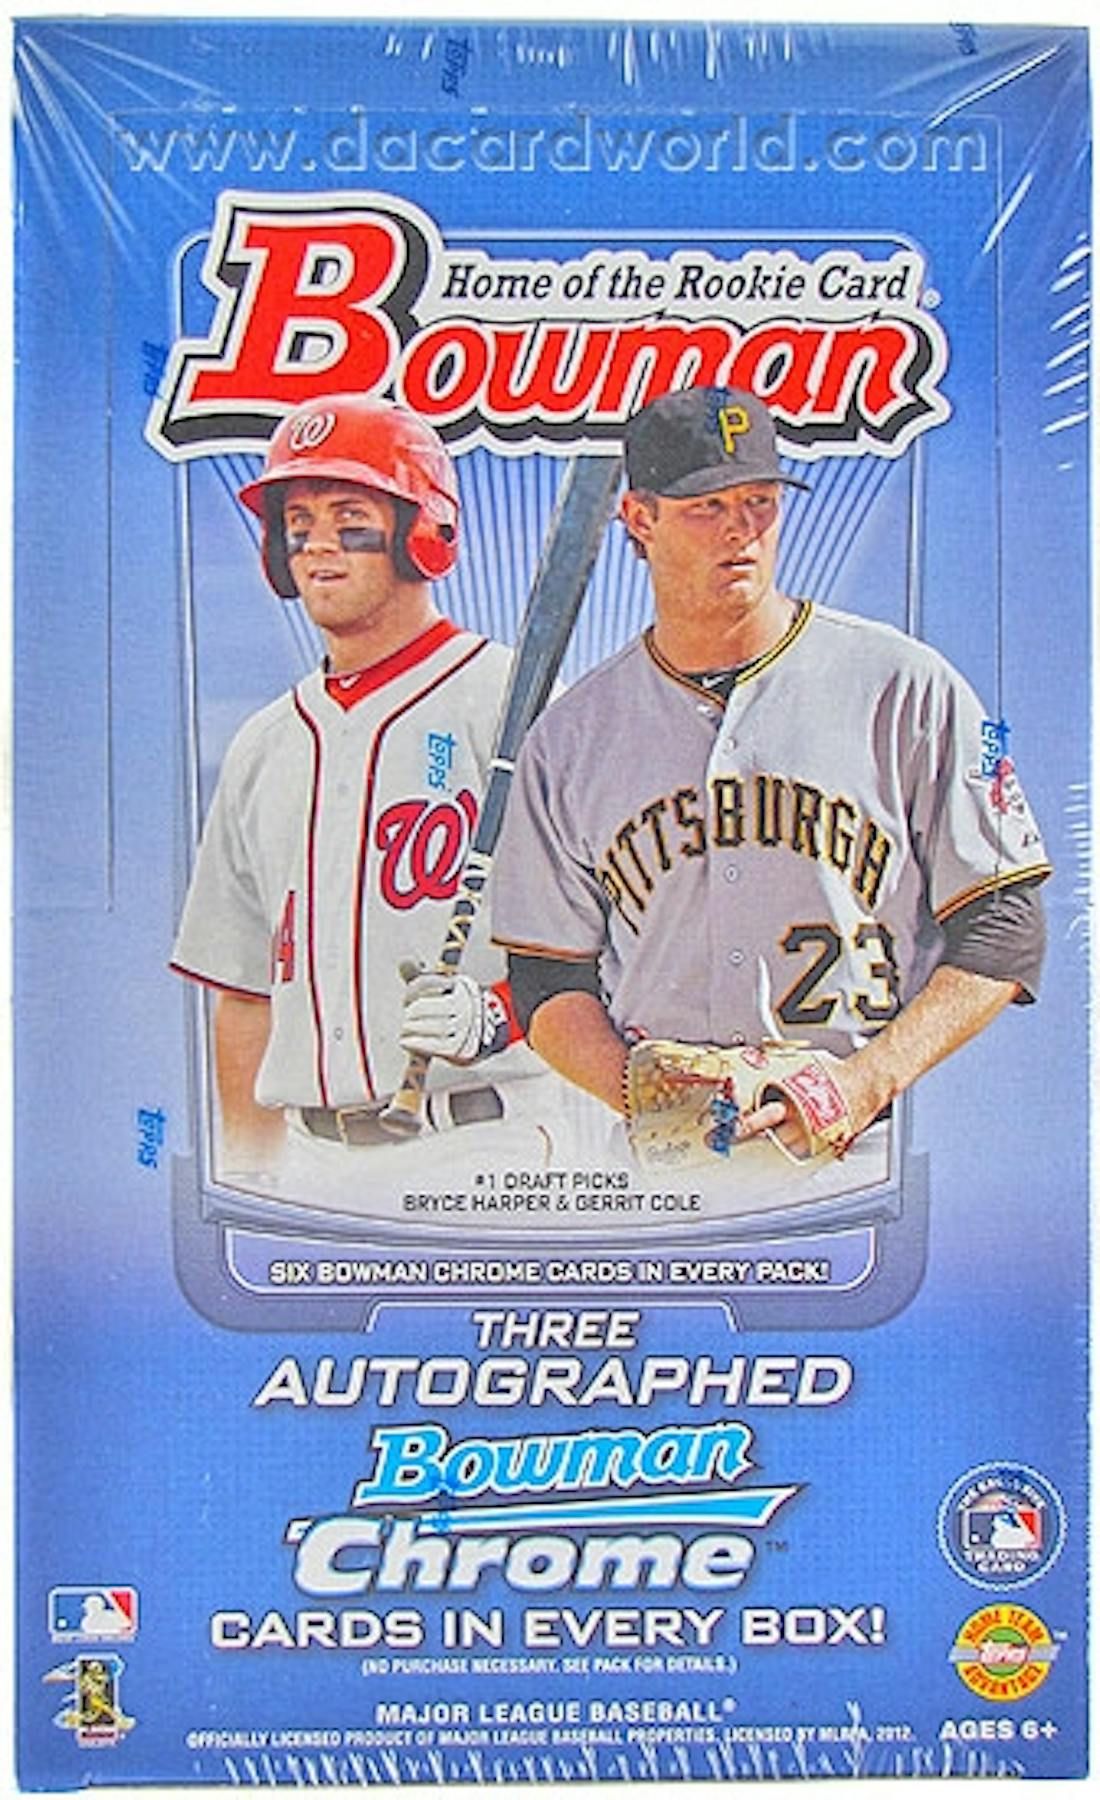 Gerrit Cole 2022 Major League Baseball All-Star Game Autographed